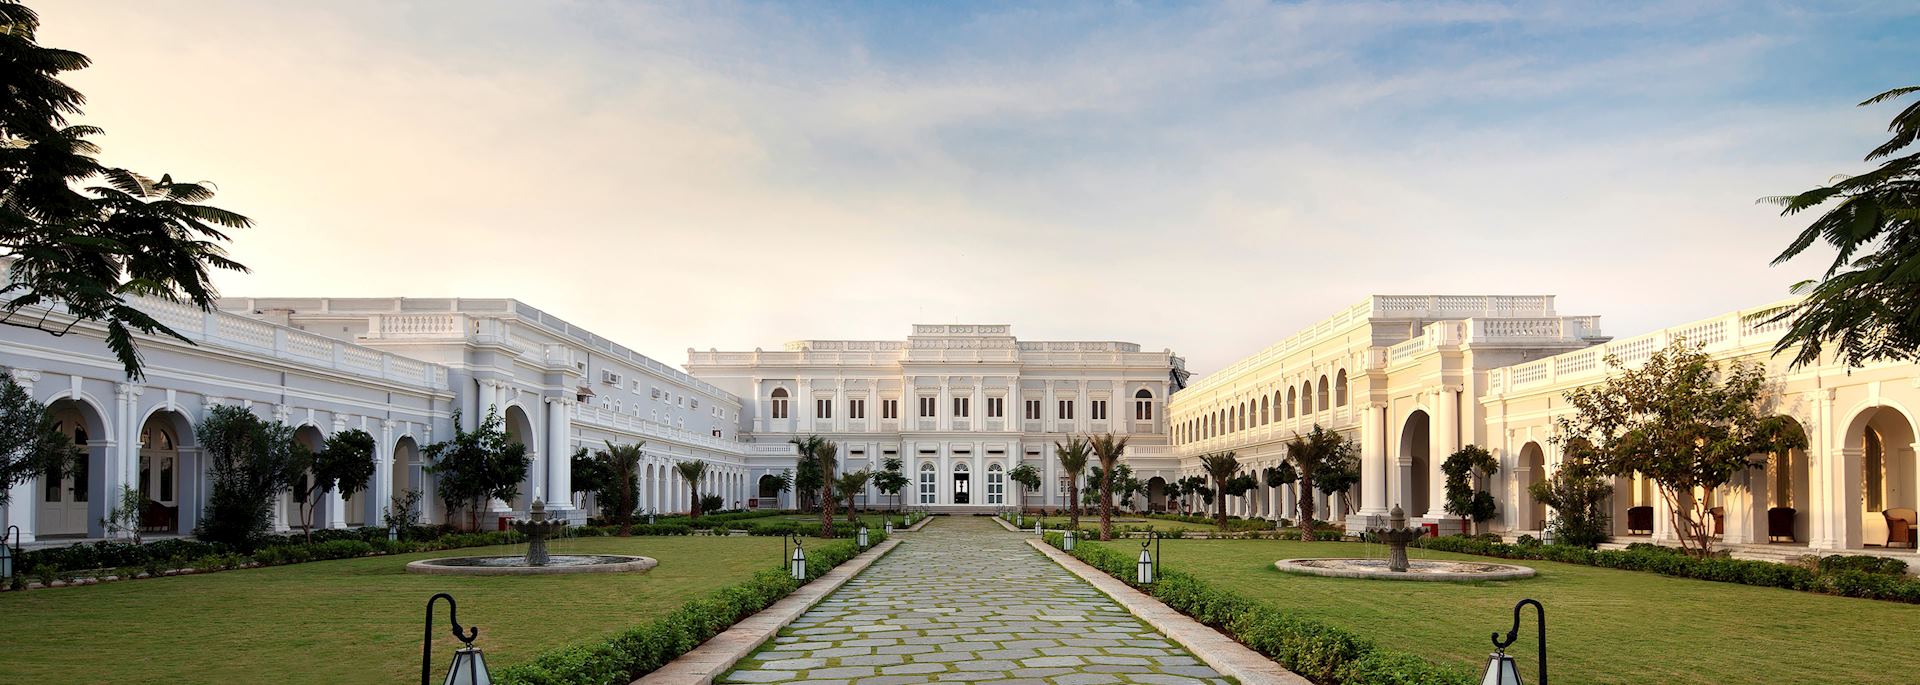 Courtyard at Taj Falaknuma Palace